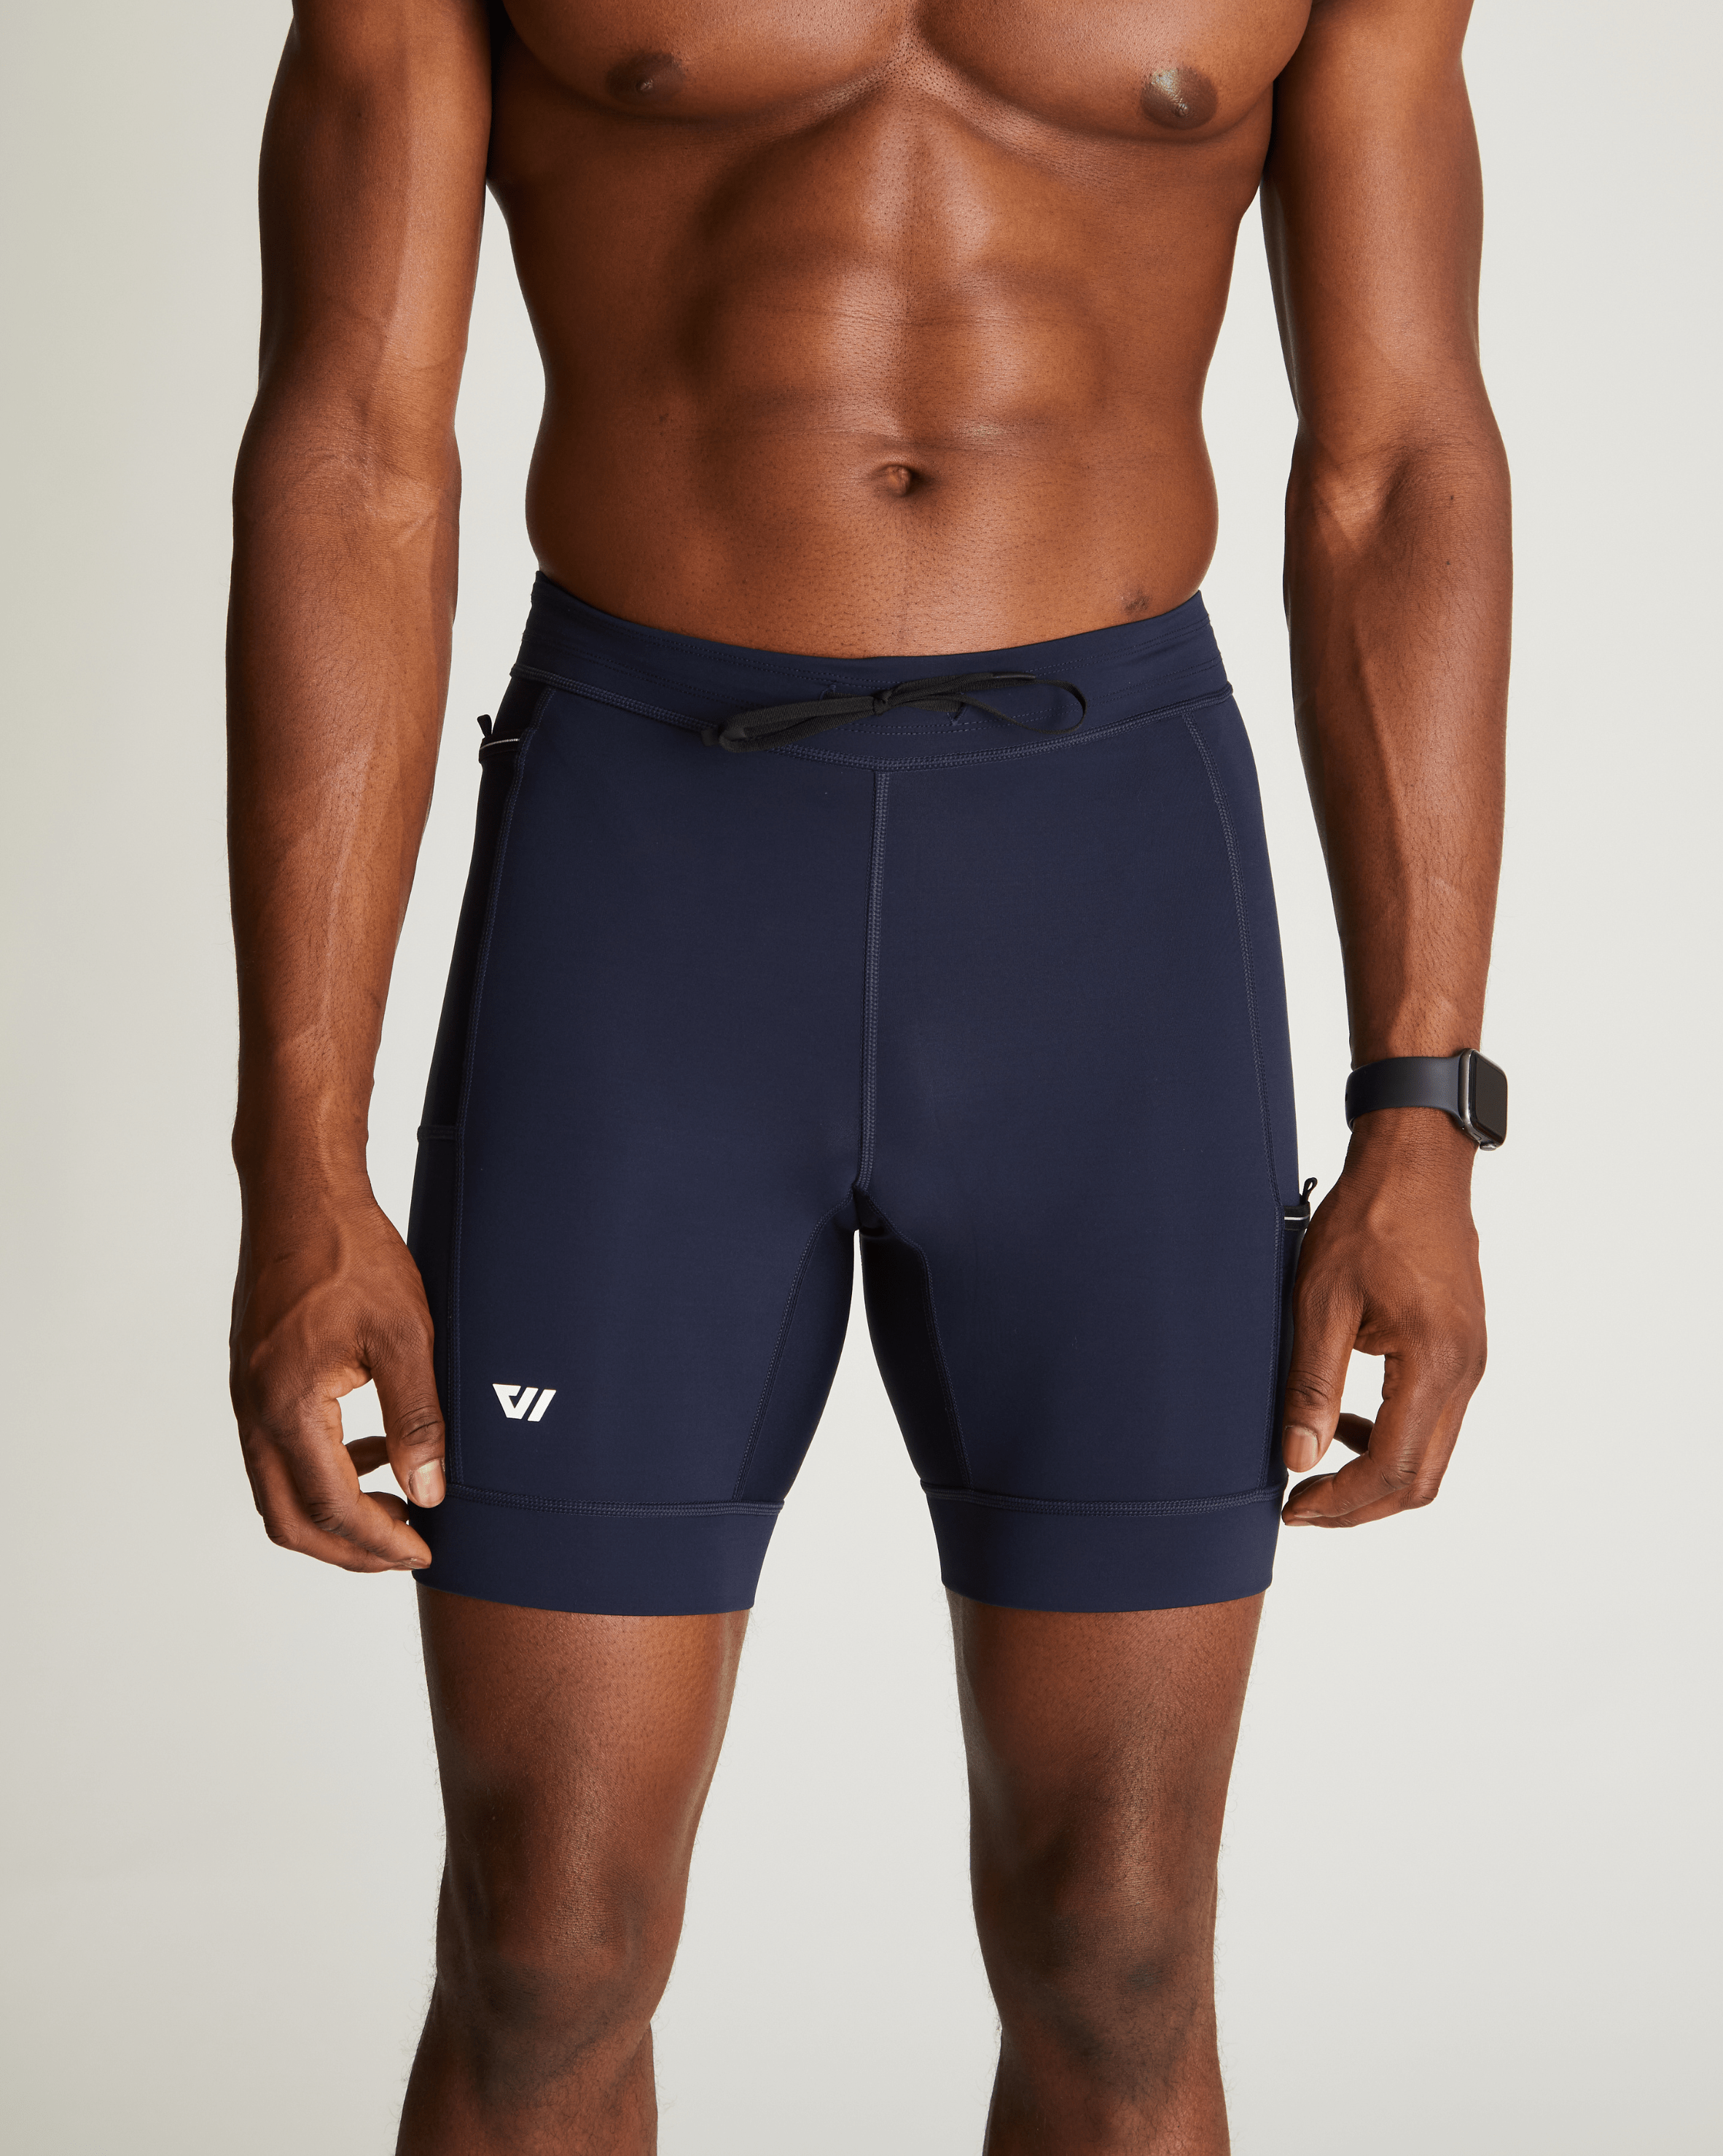 Men Cotton Compression Shorts and Half Tights (Comet Blue)